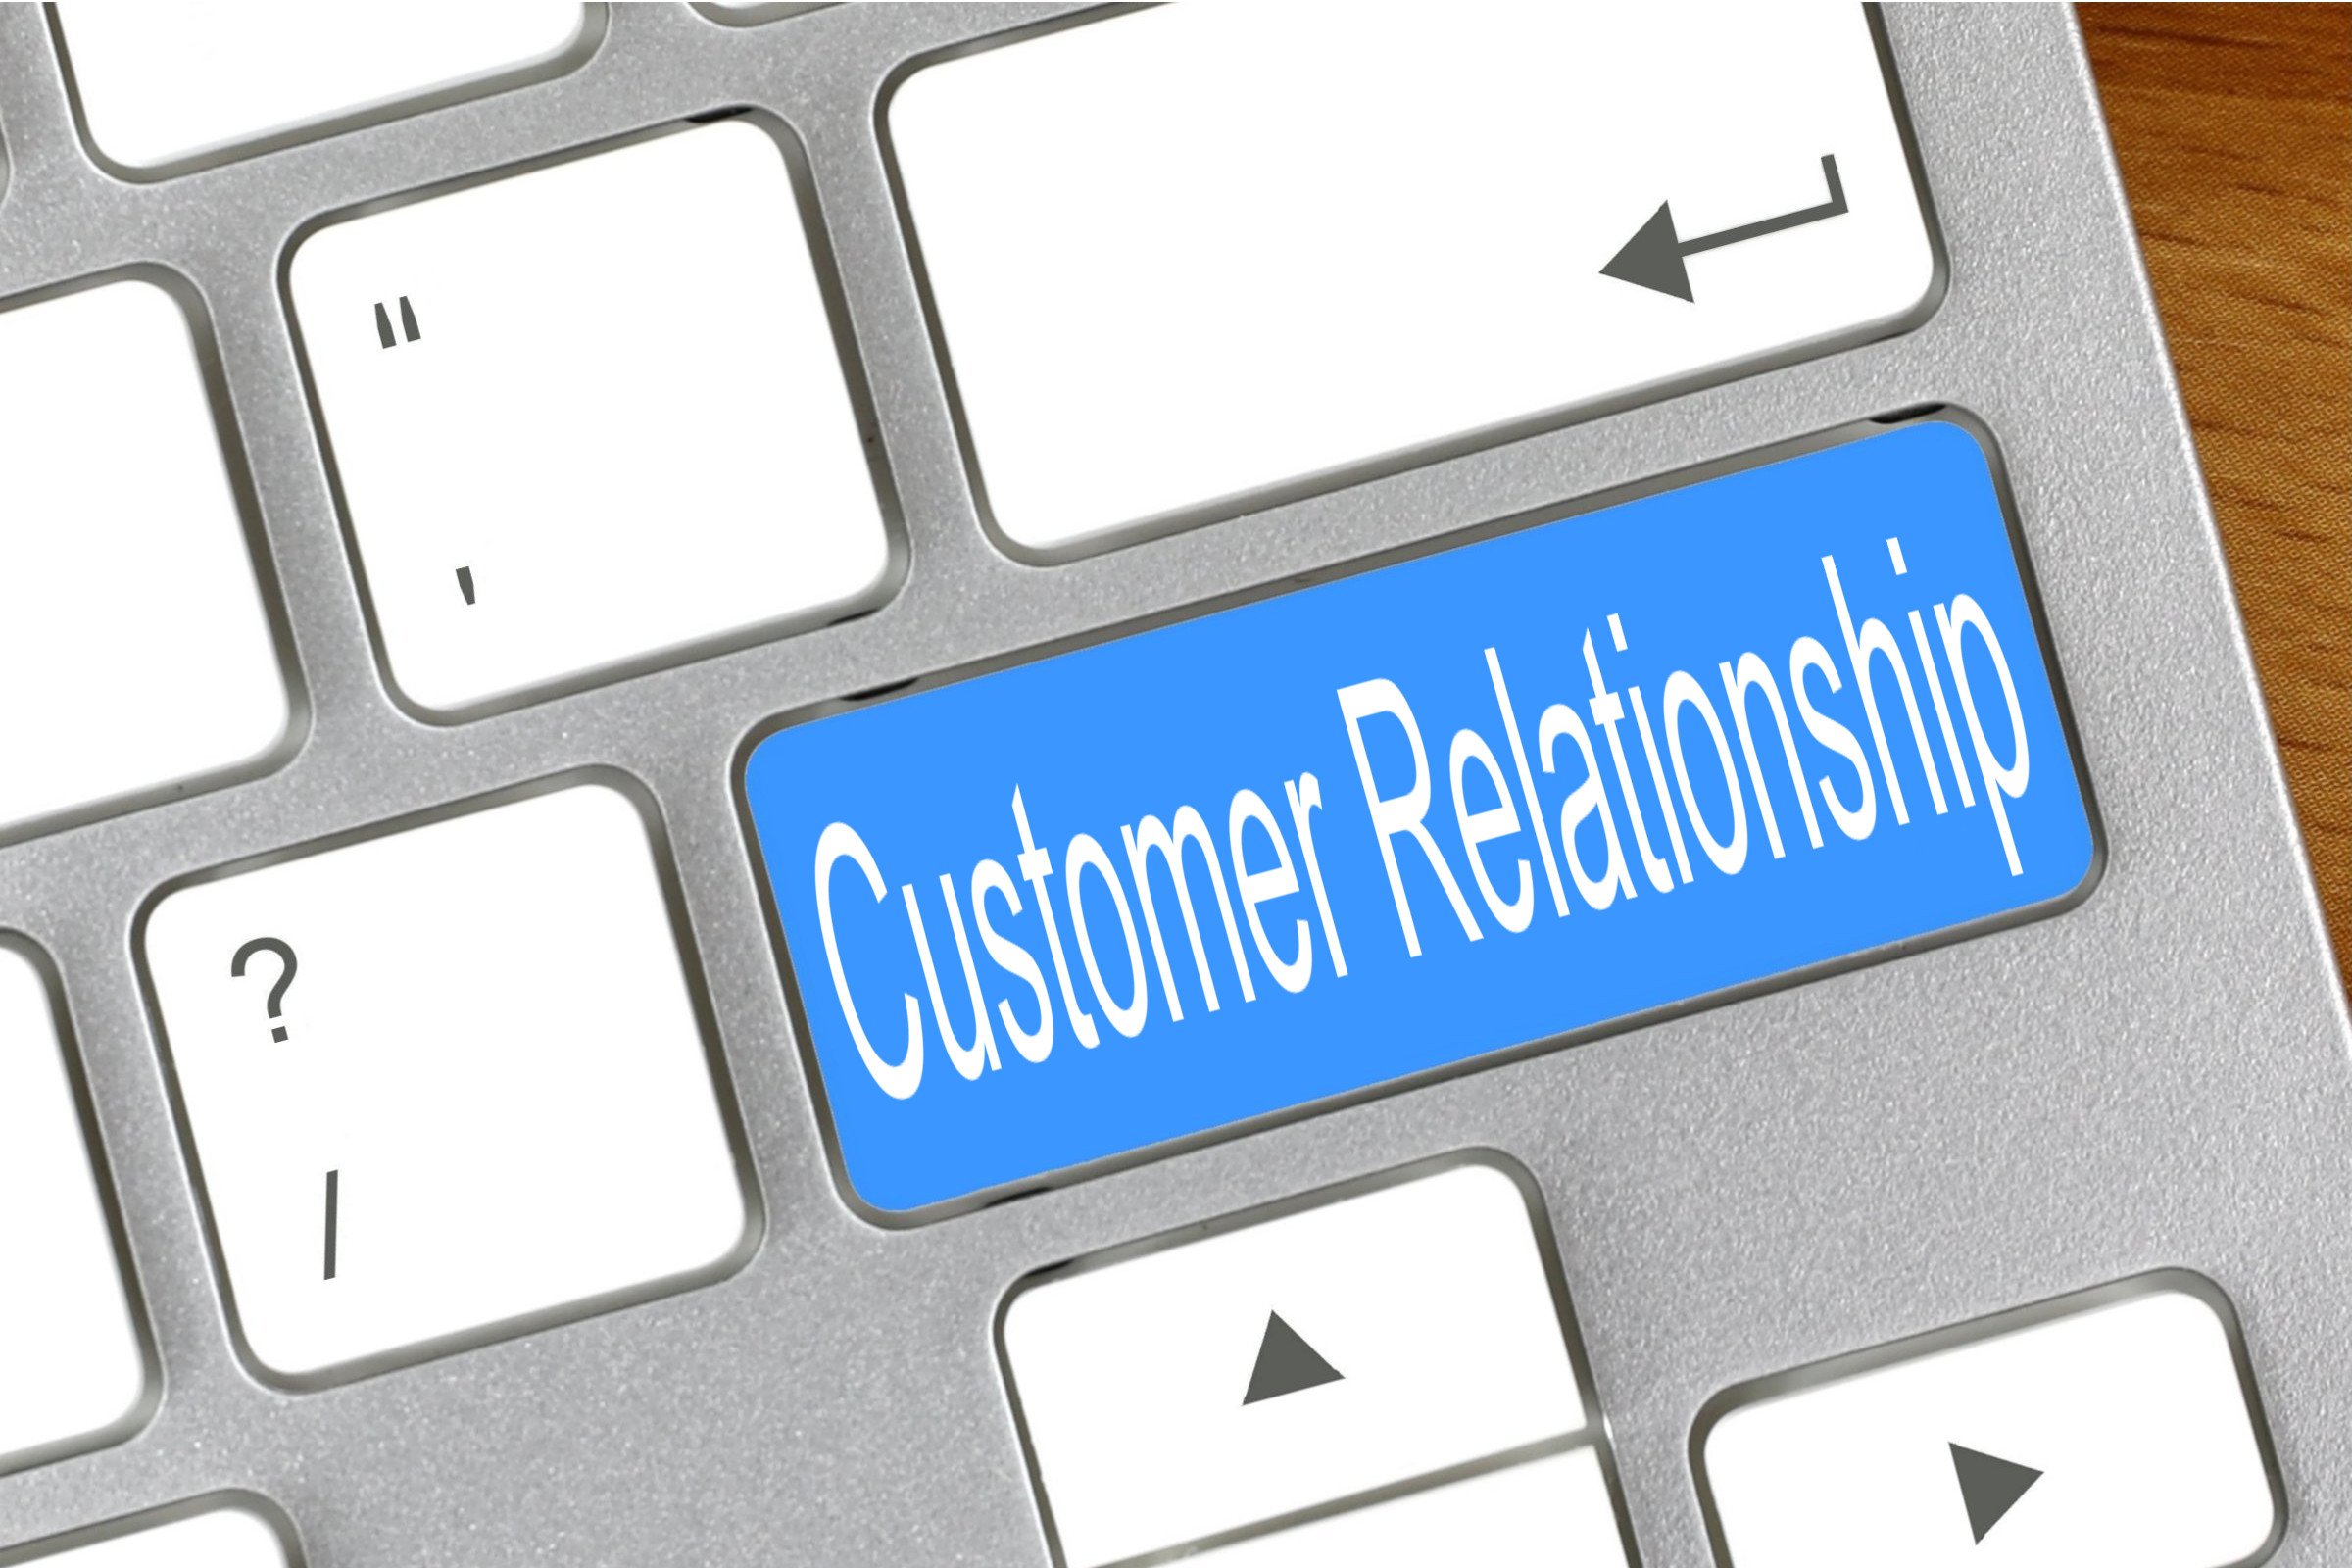 customer relationship